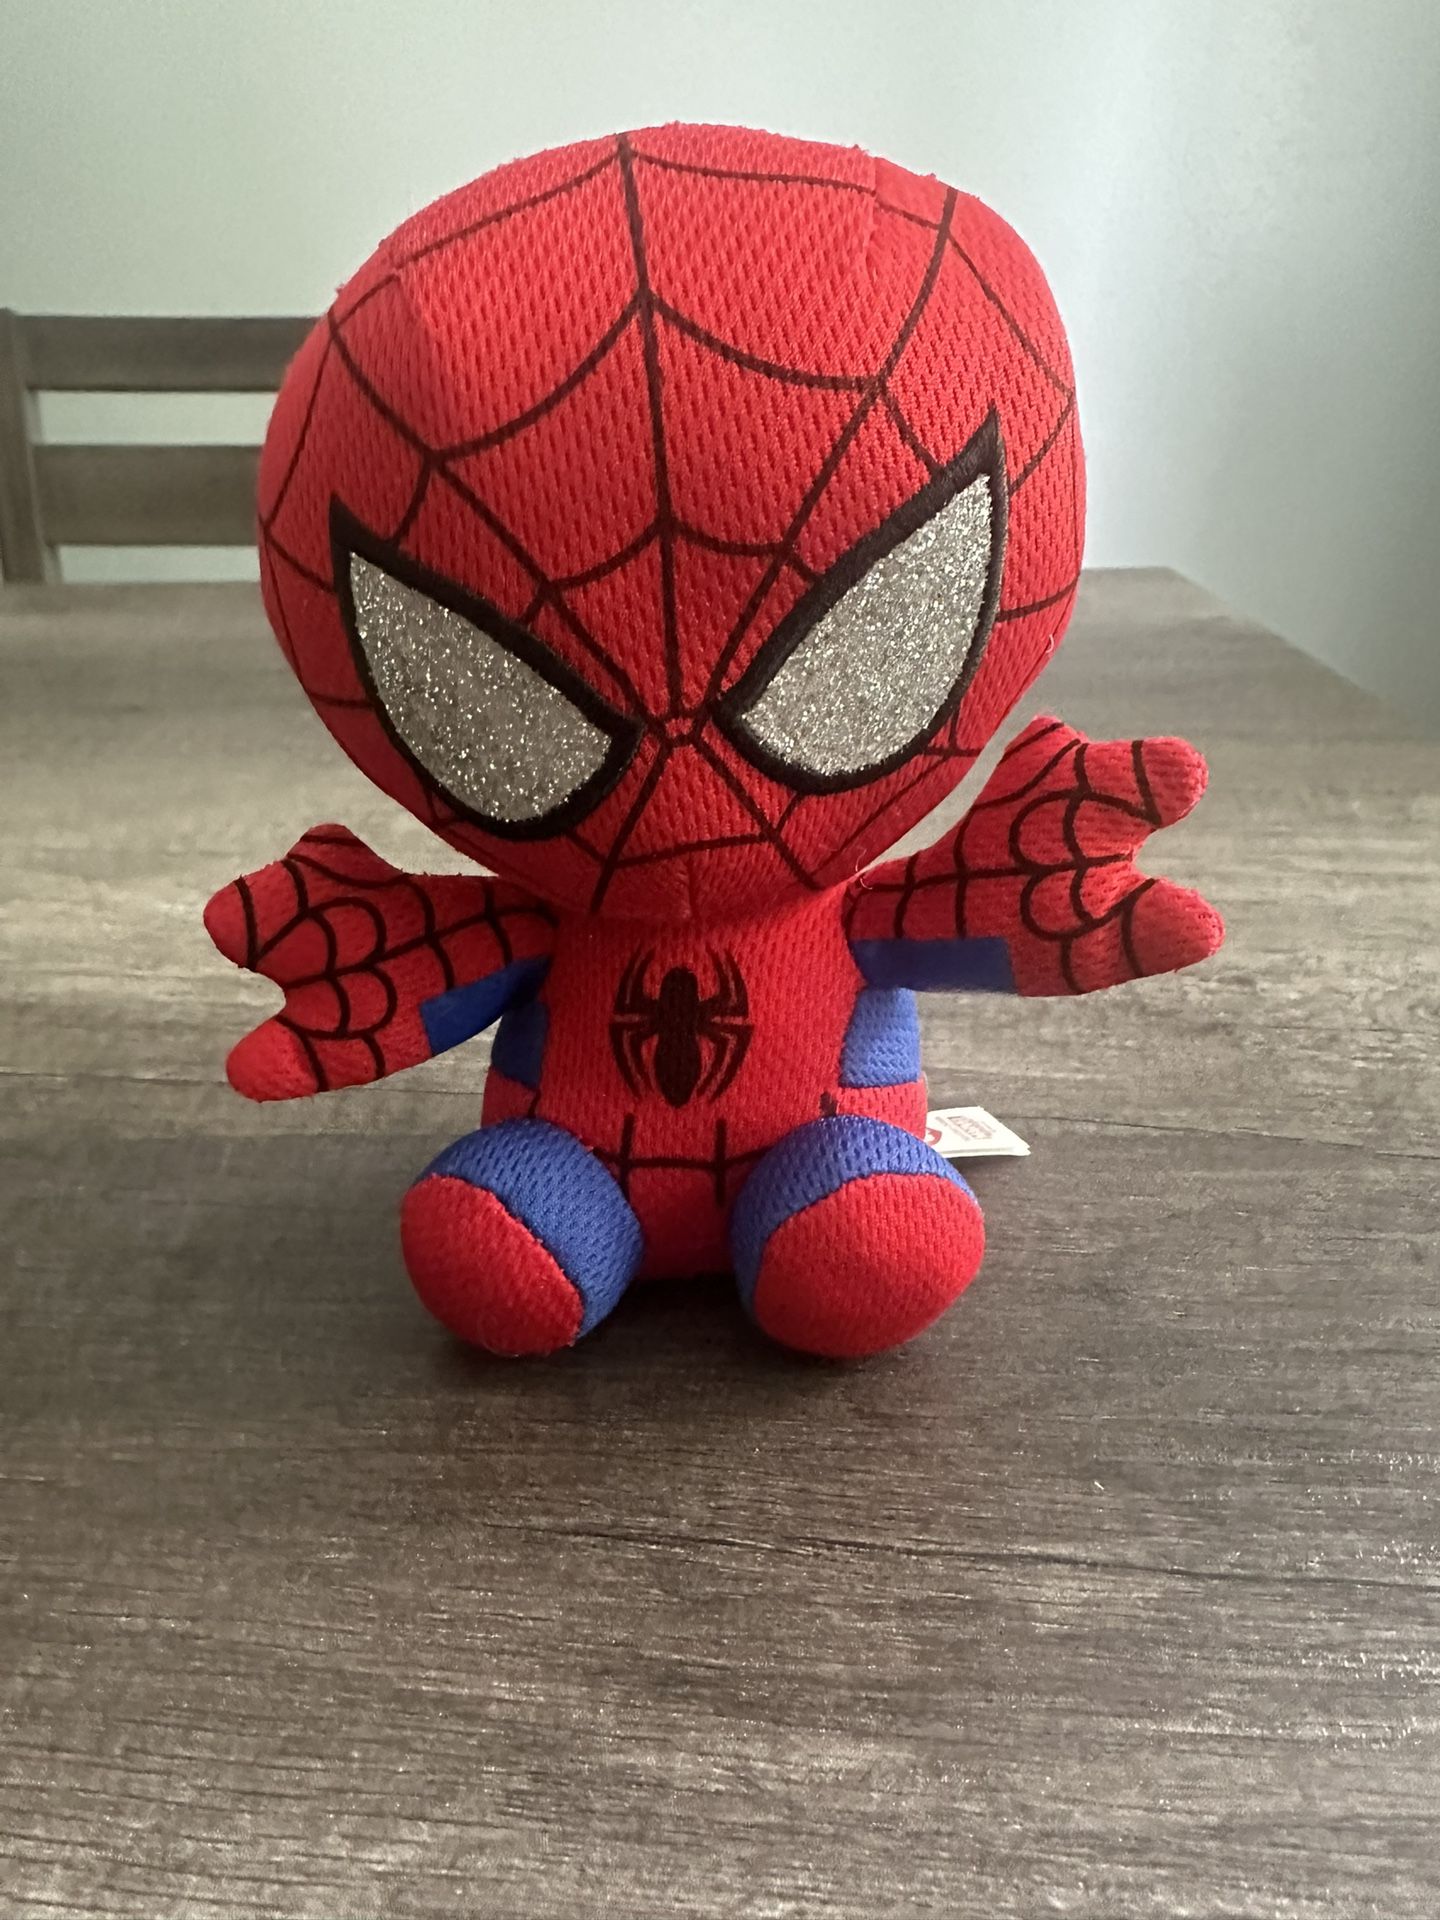 TY Beanie Babies 6" Marvel Spiderman Plush Stuffed Animal Toy, Marvel Plush